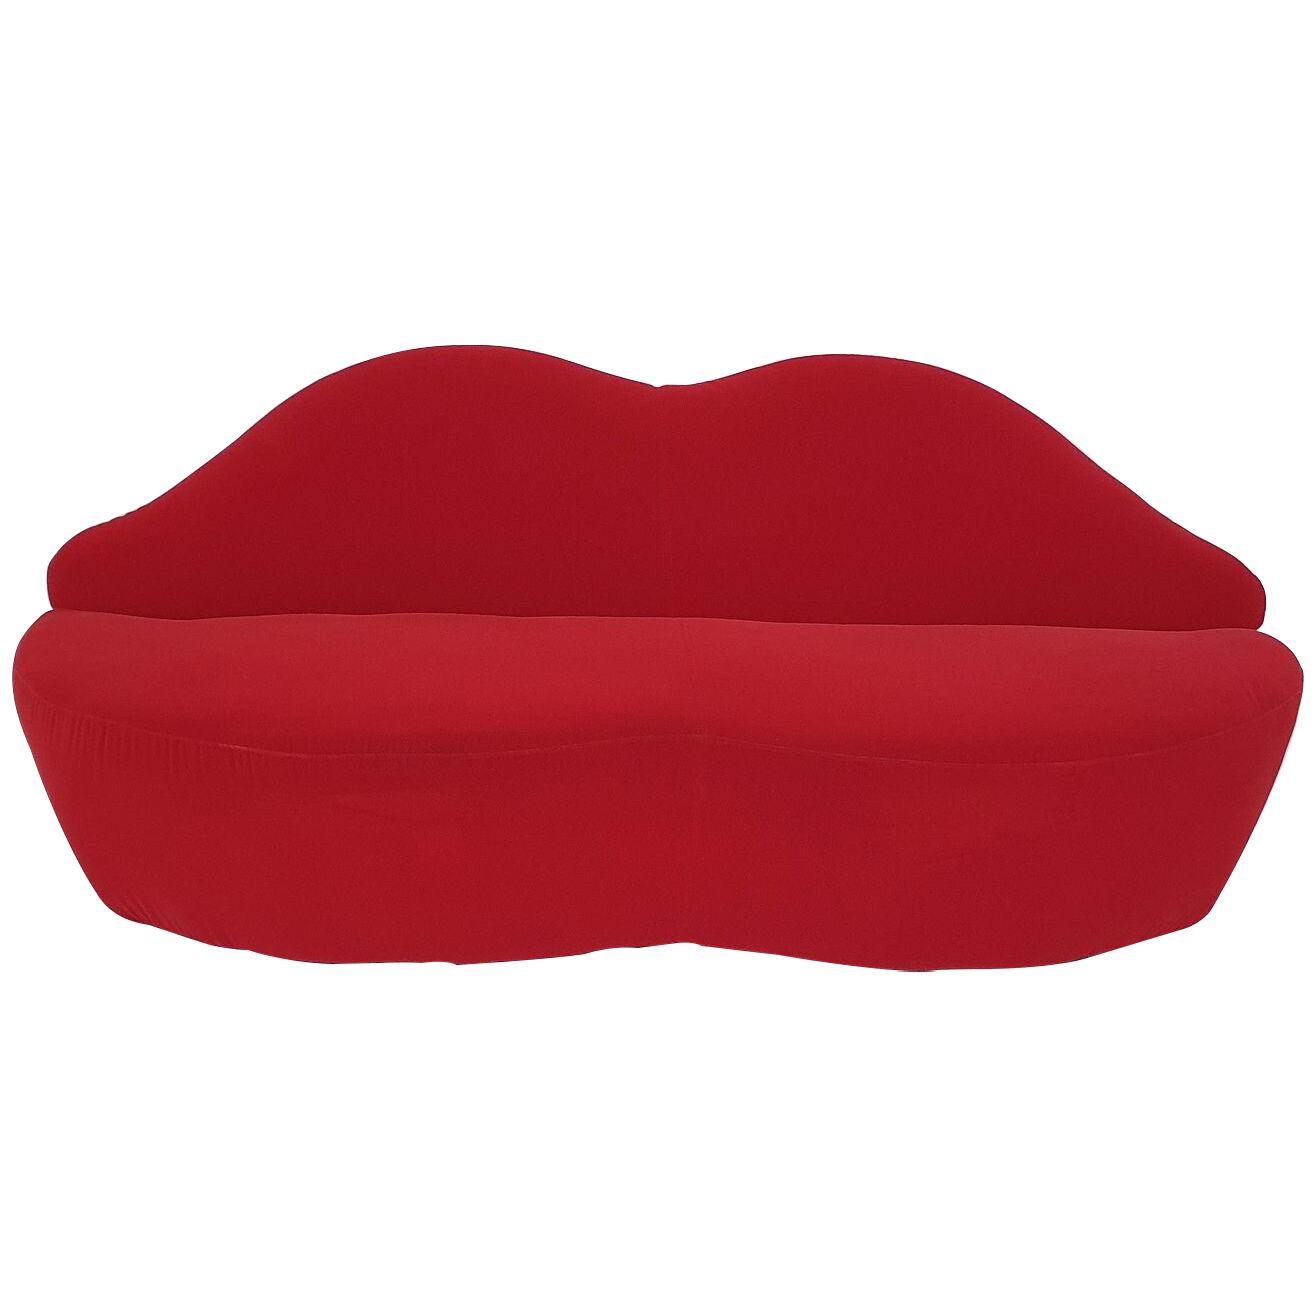 Gufram Bocca style "lips"sofa